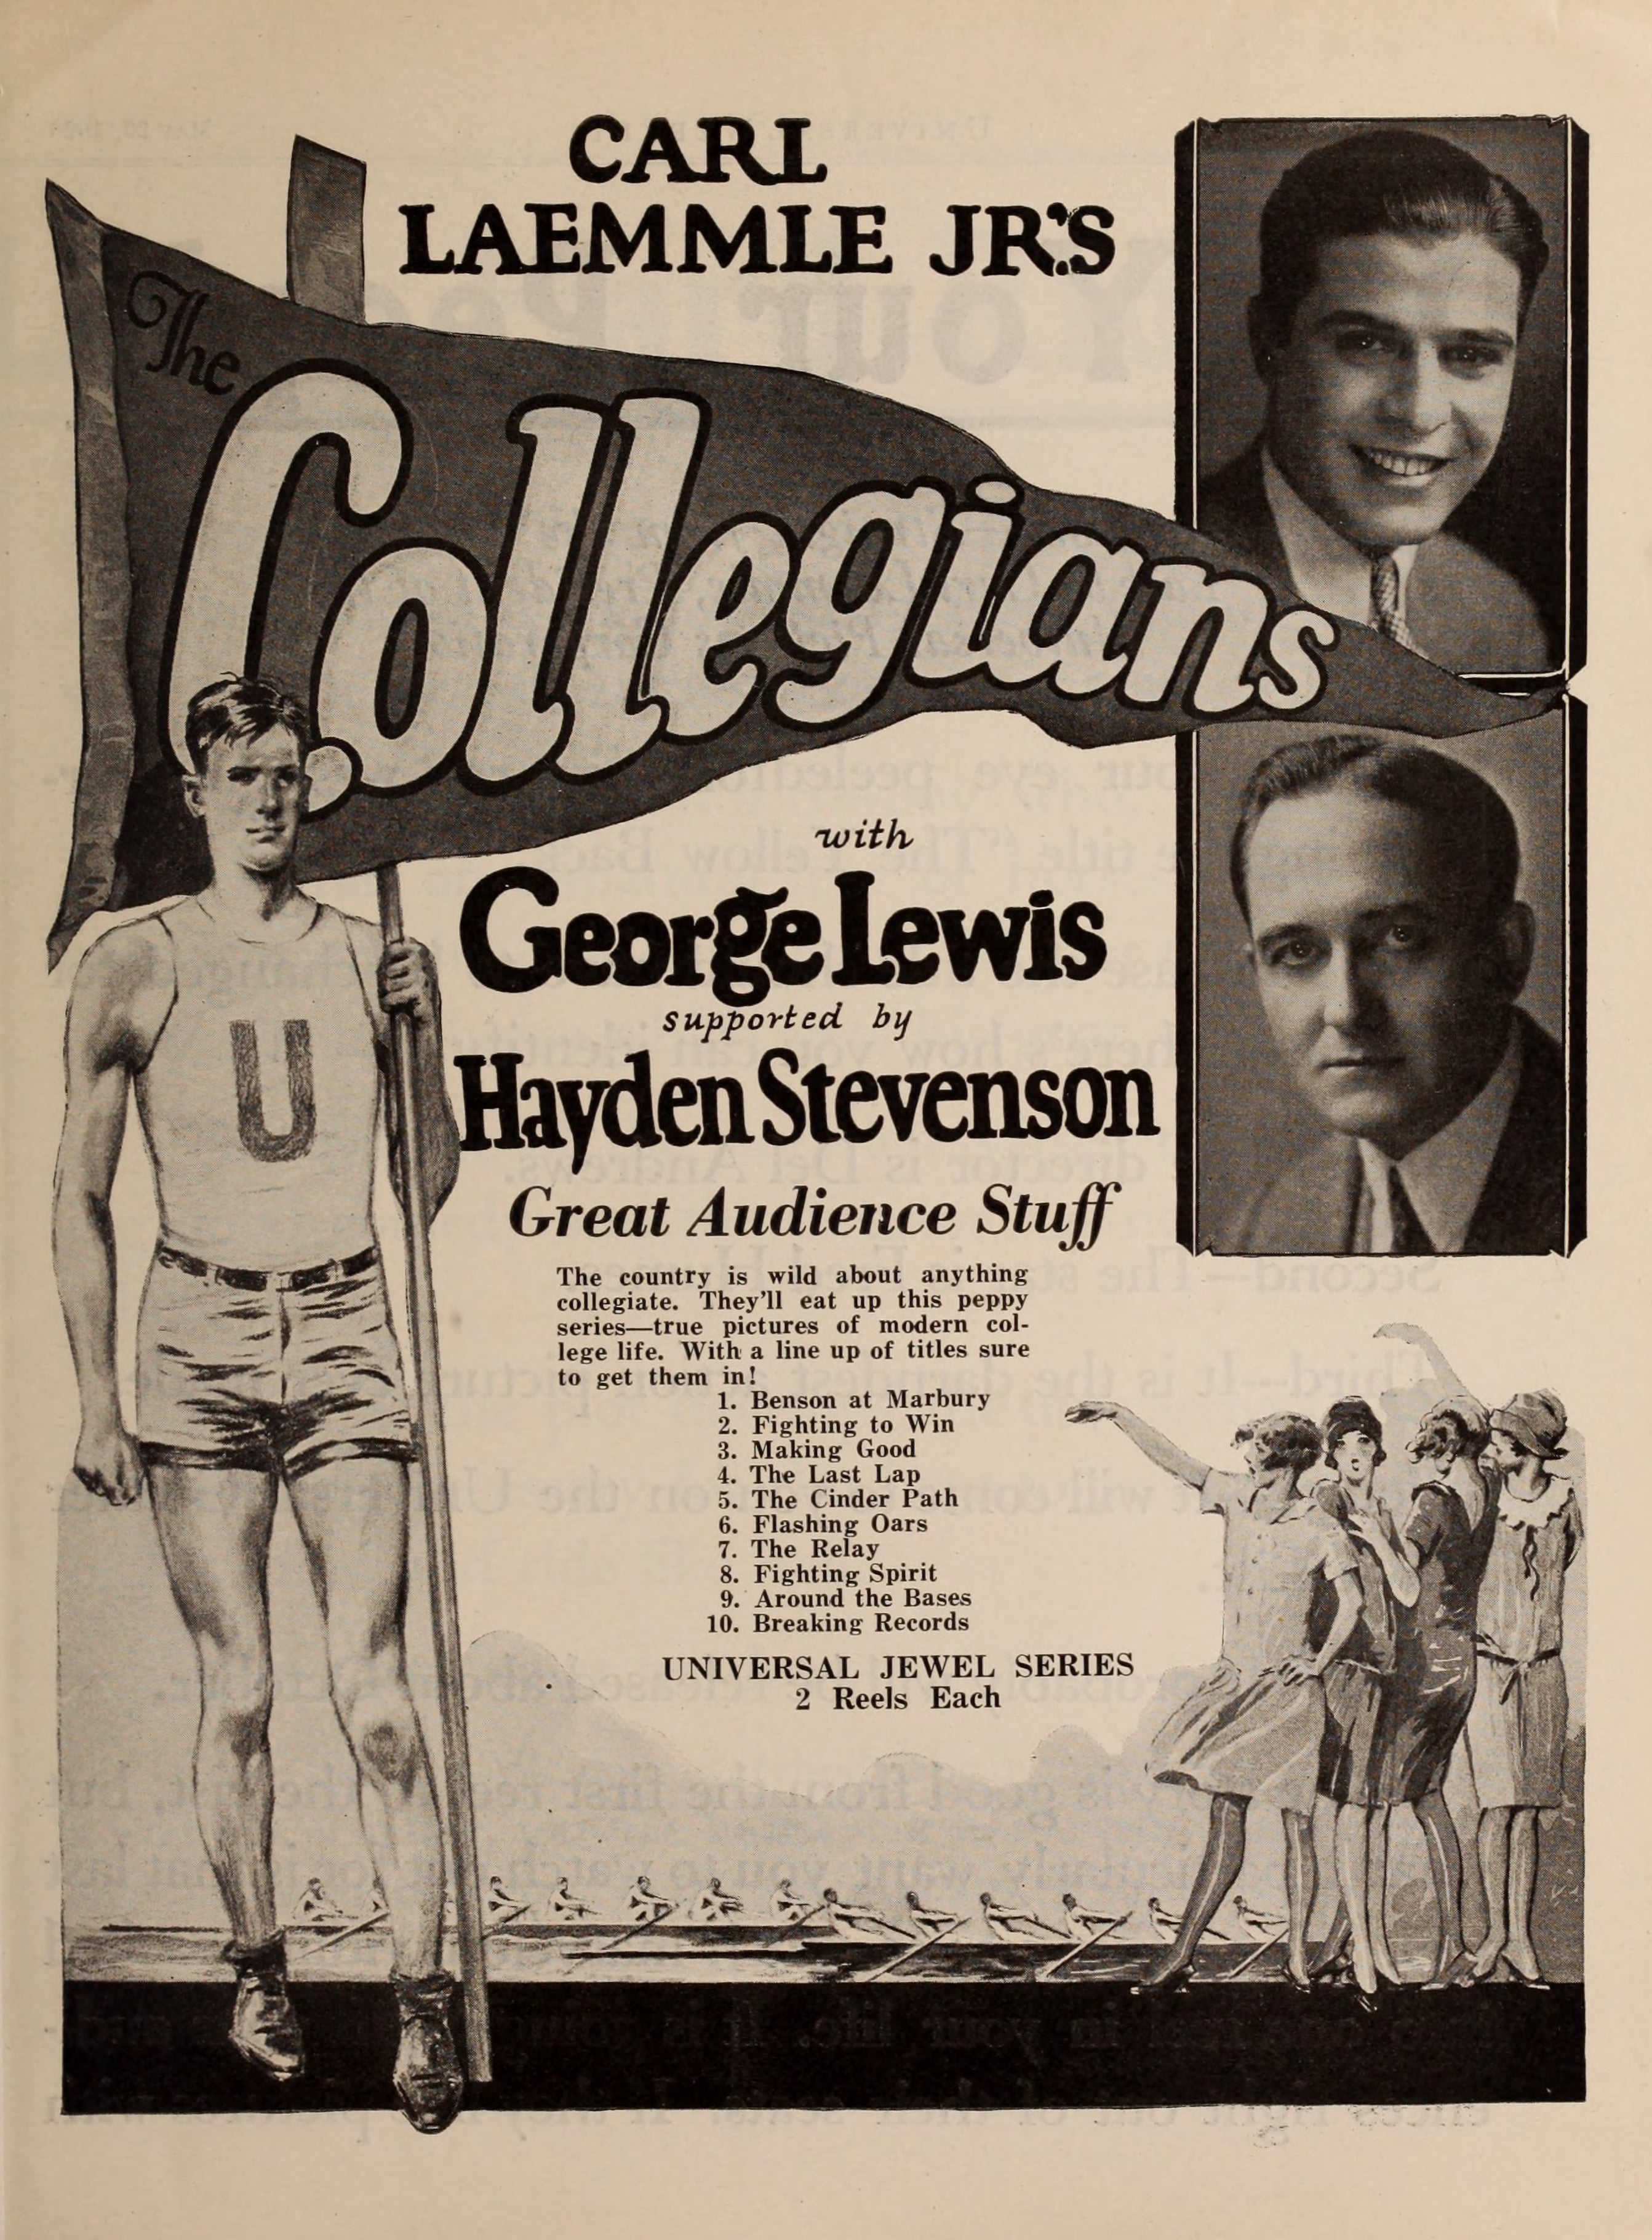 The Collegians (1926) | www.vintoz.com